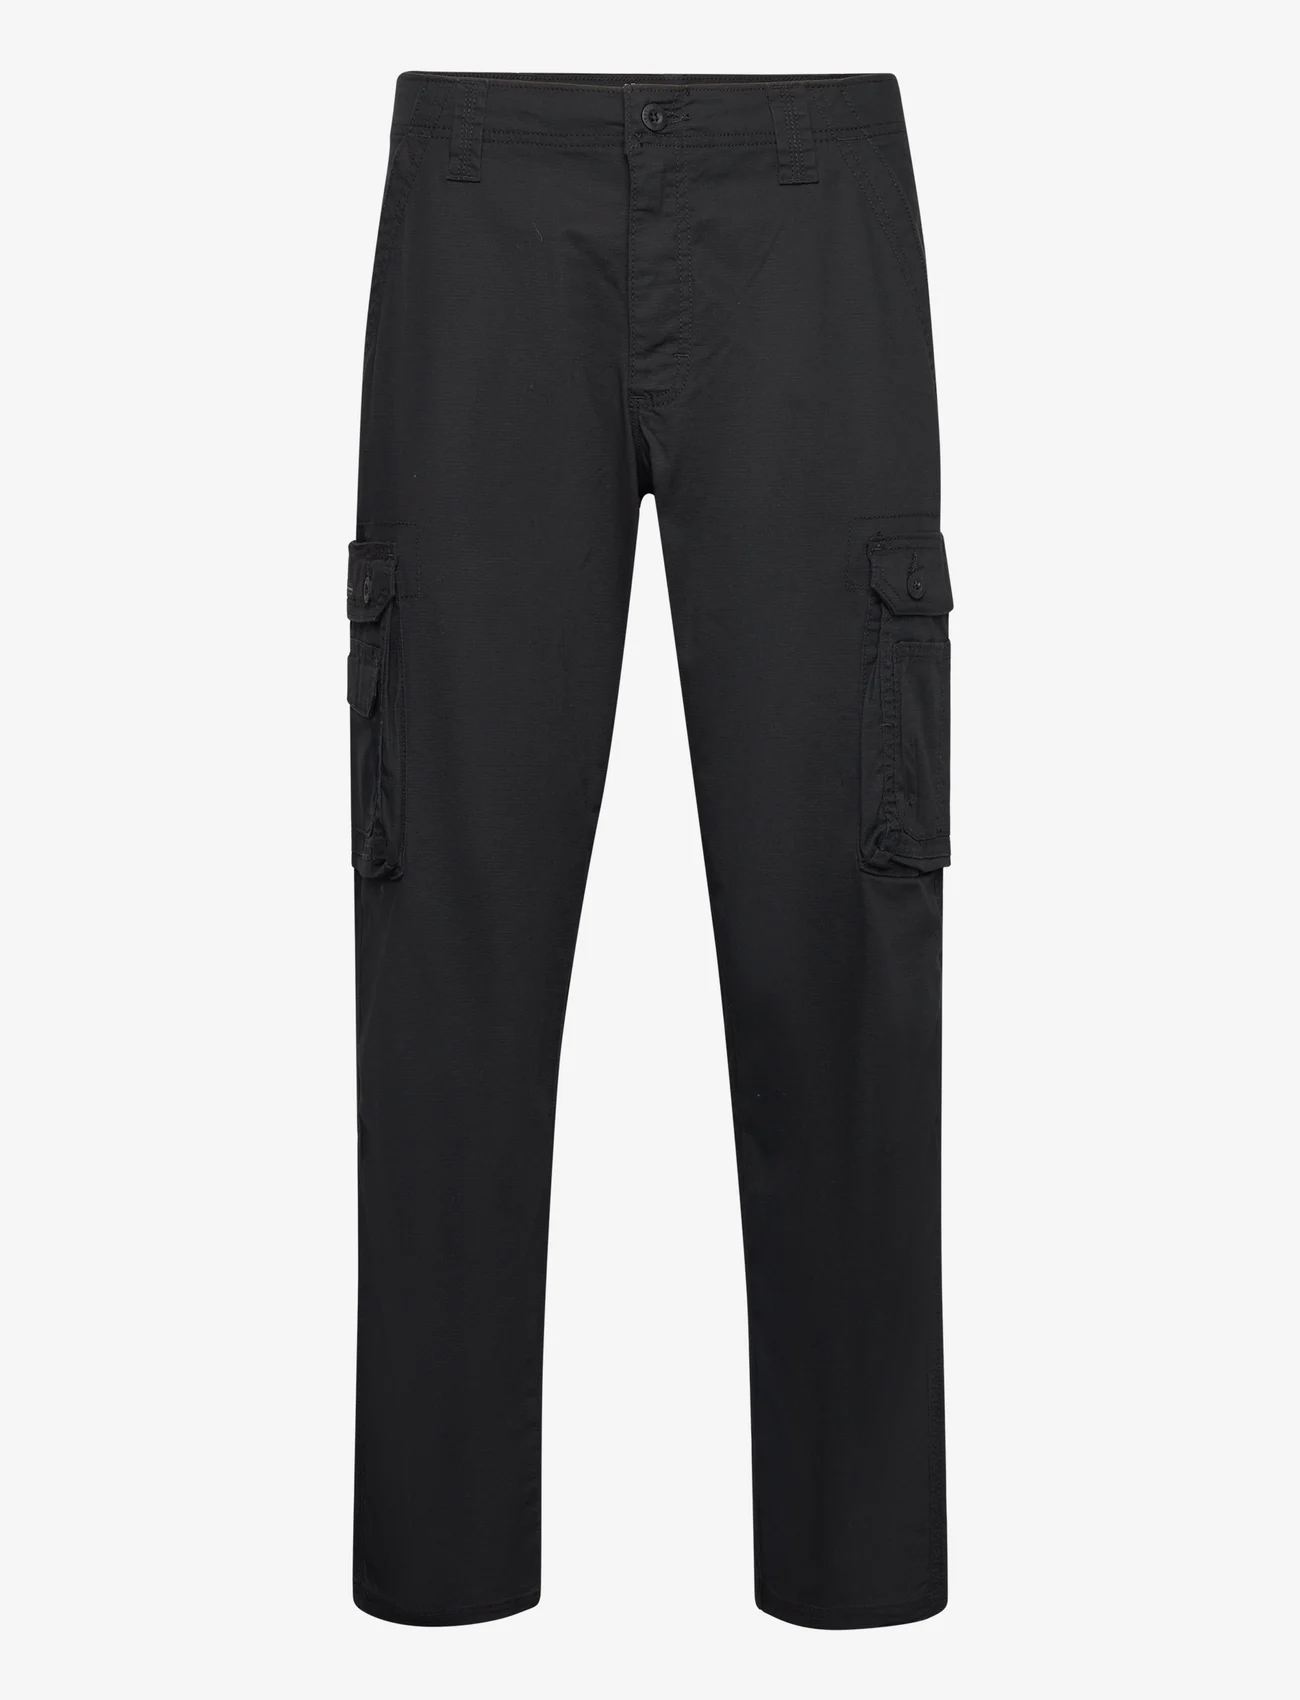 Lee Jeans - WYOMING CARGO LONG - cargo pants - black - 0